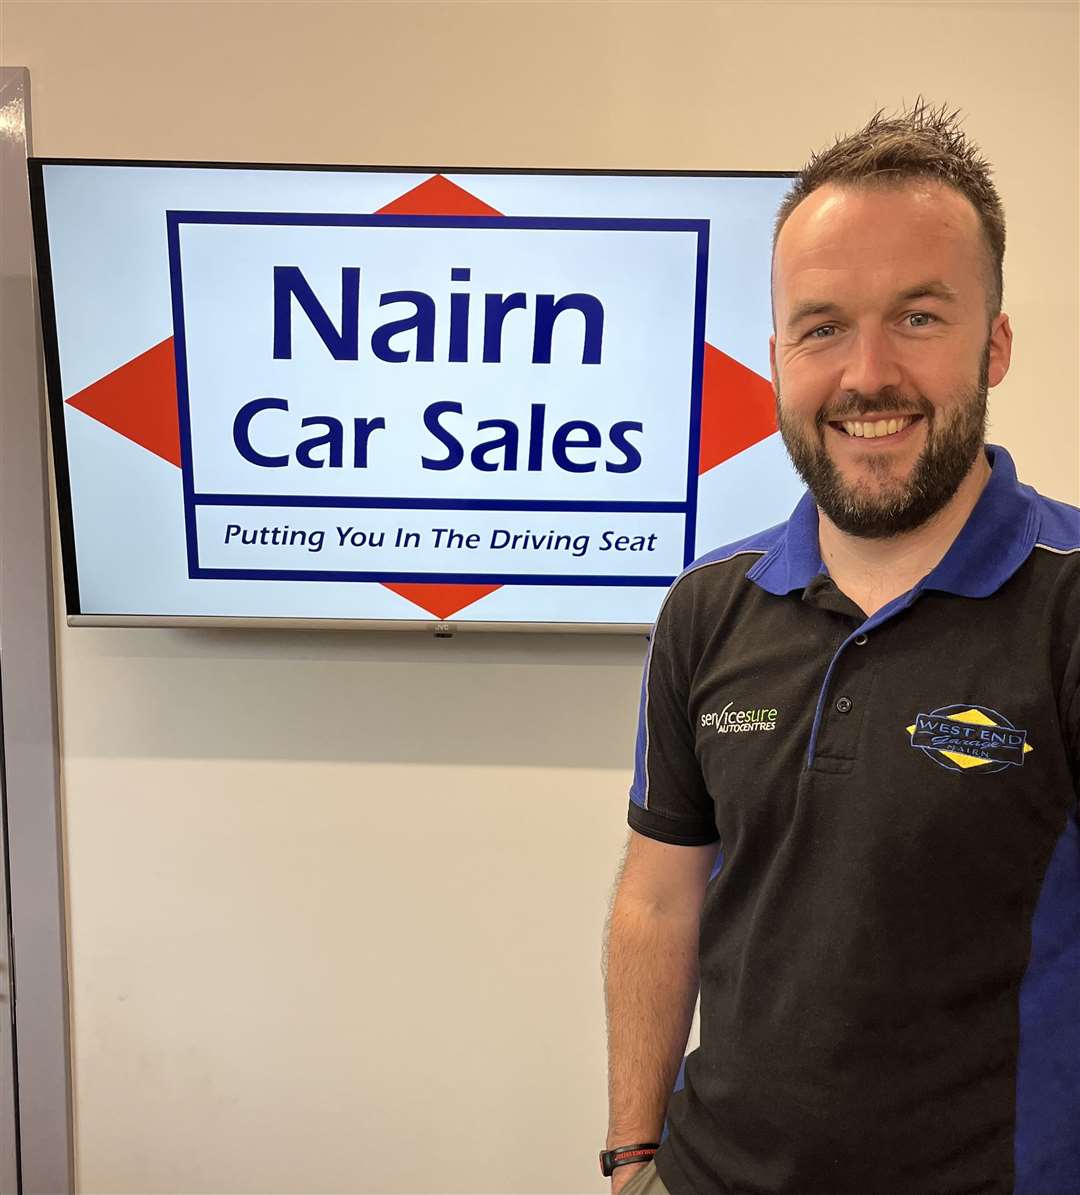 Dean Clark of Nairn Car Sales